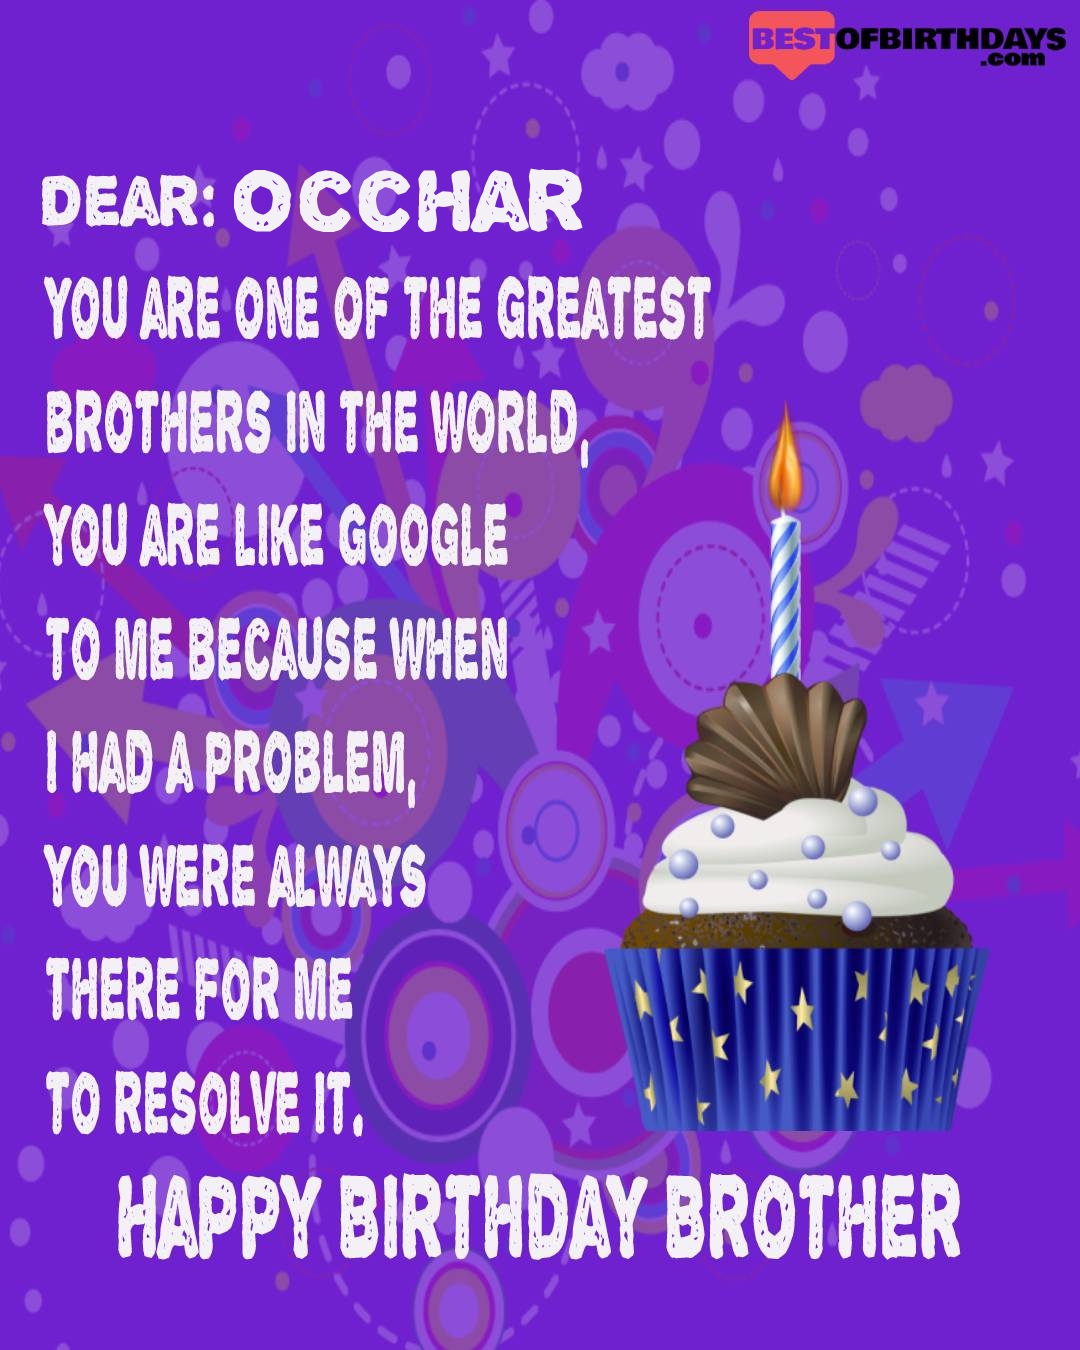 Happy birthday occhar bhai brother bro